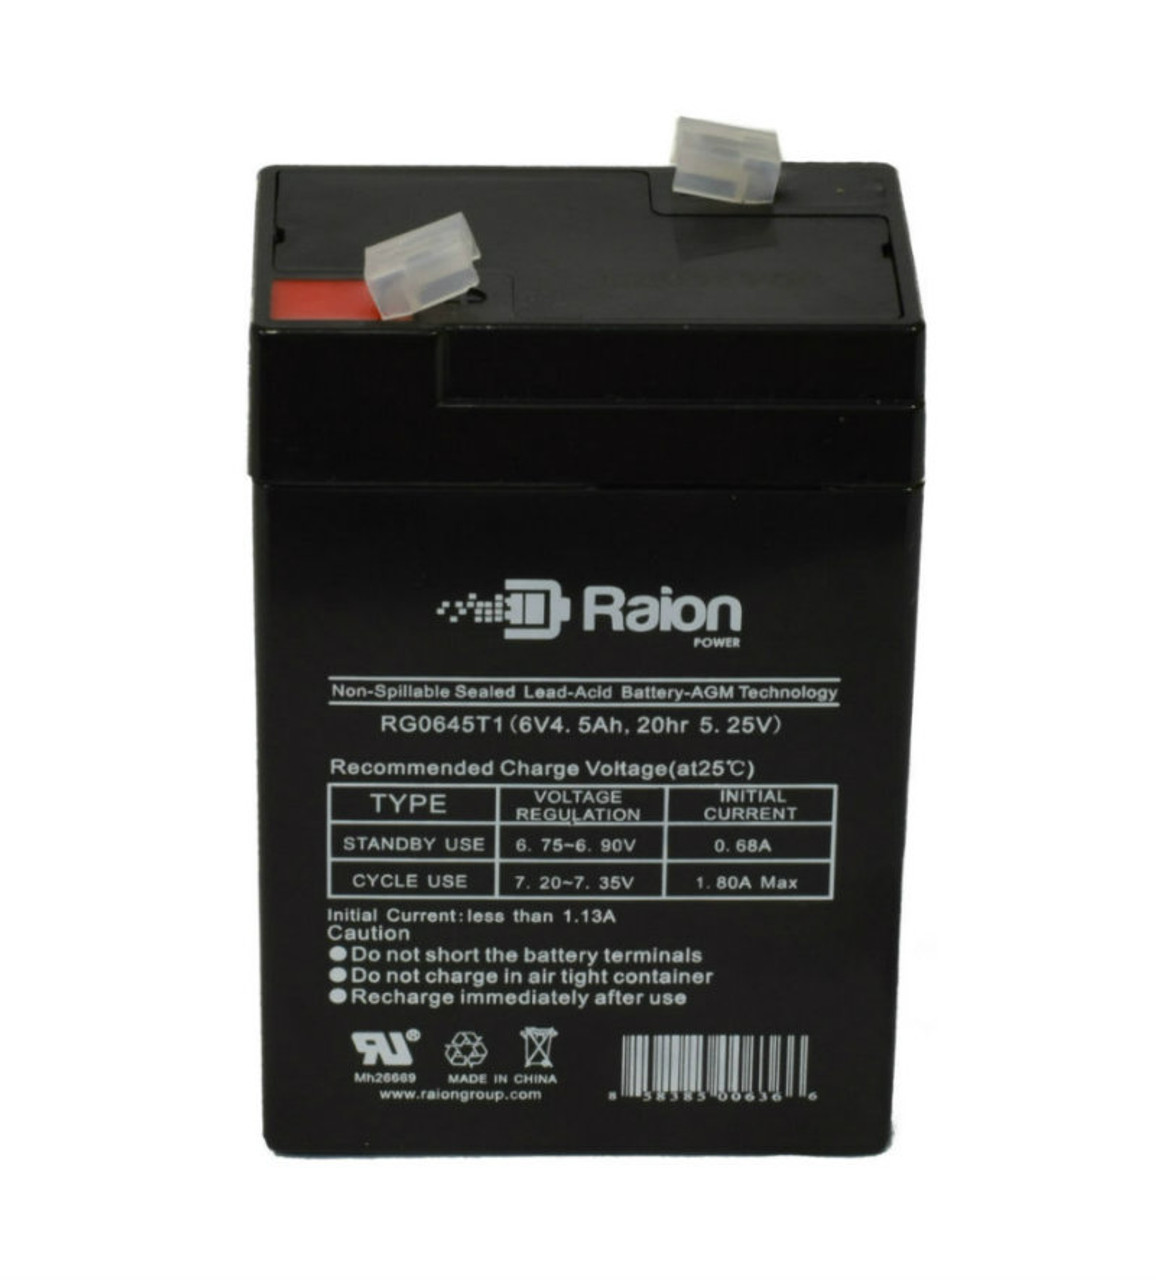 Raion Power RG0645T1 Replacement Battery Cartridge for Heath-Zenith SL-7001